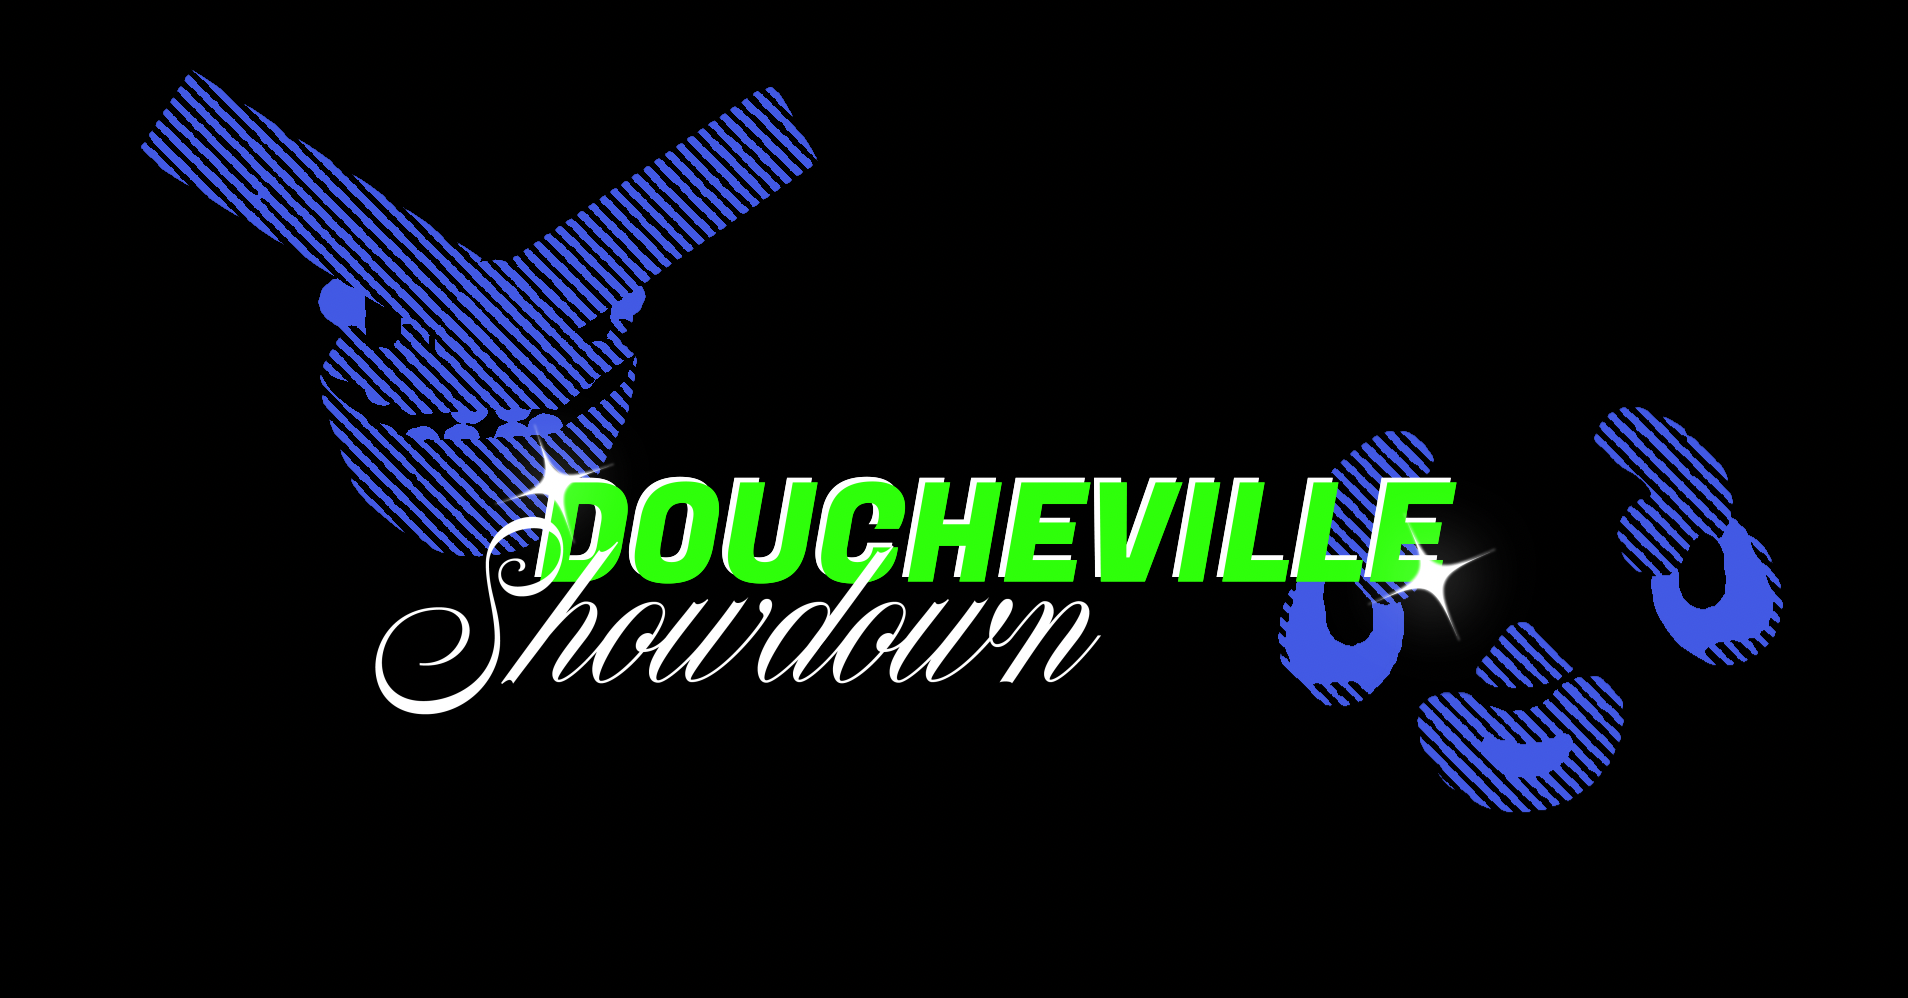 Doucheville Showdown